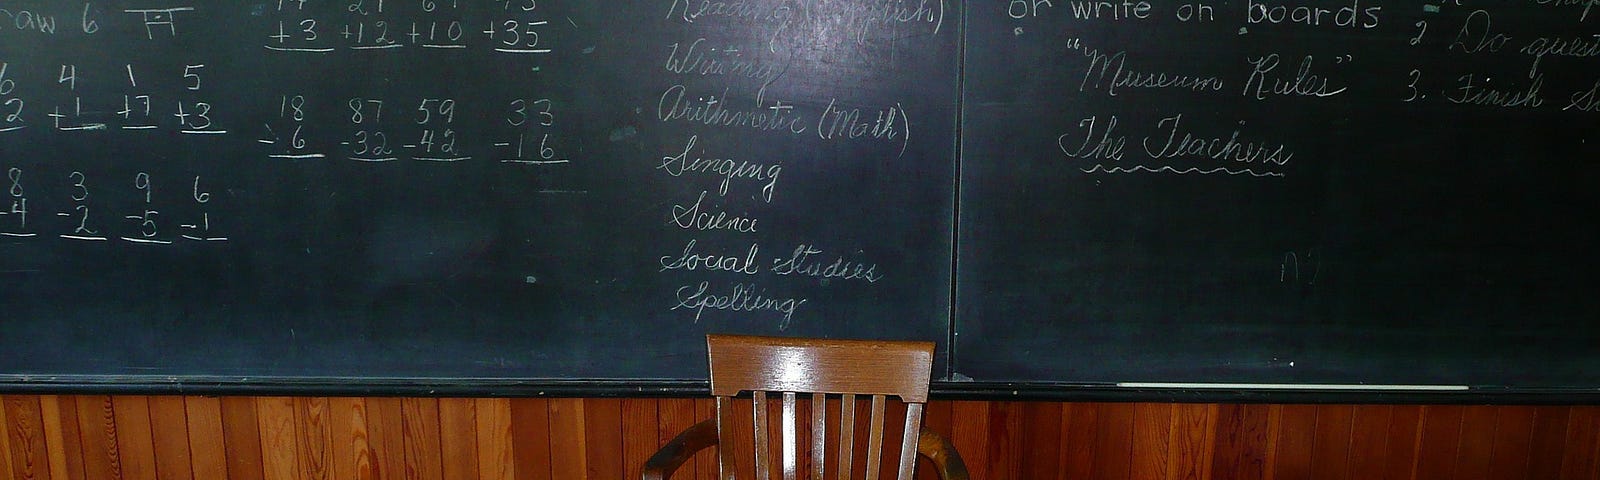 Image of books spread across a teacher’s desk in front of a classroom chalkboard.